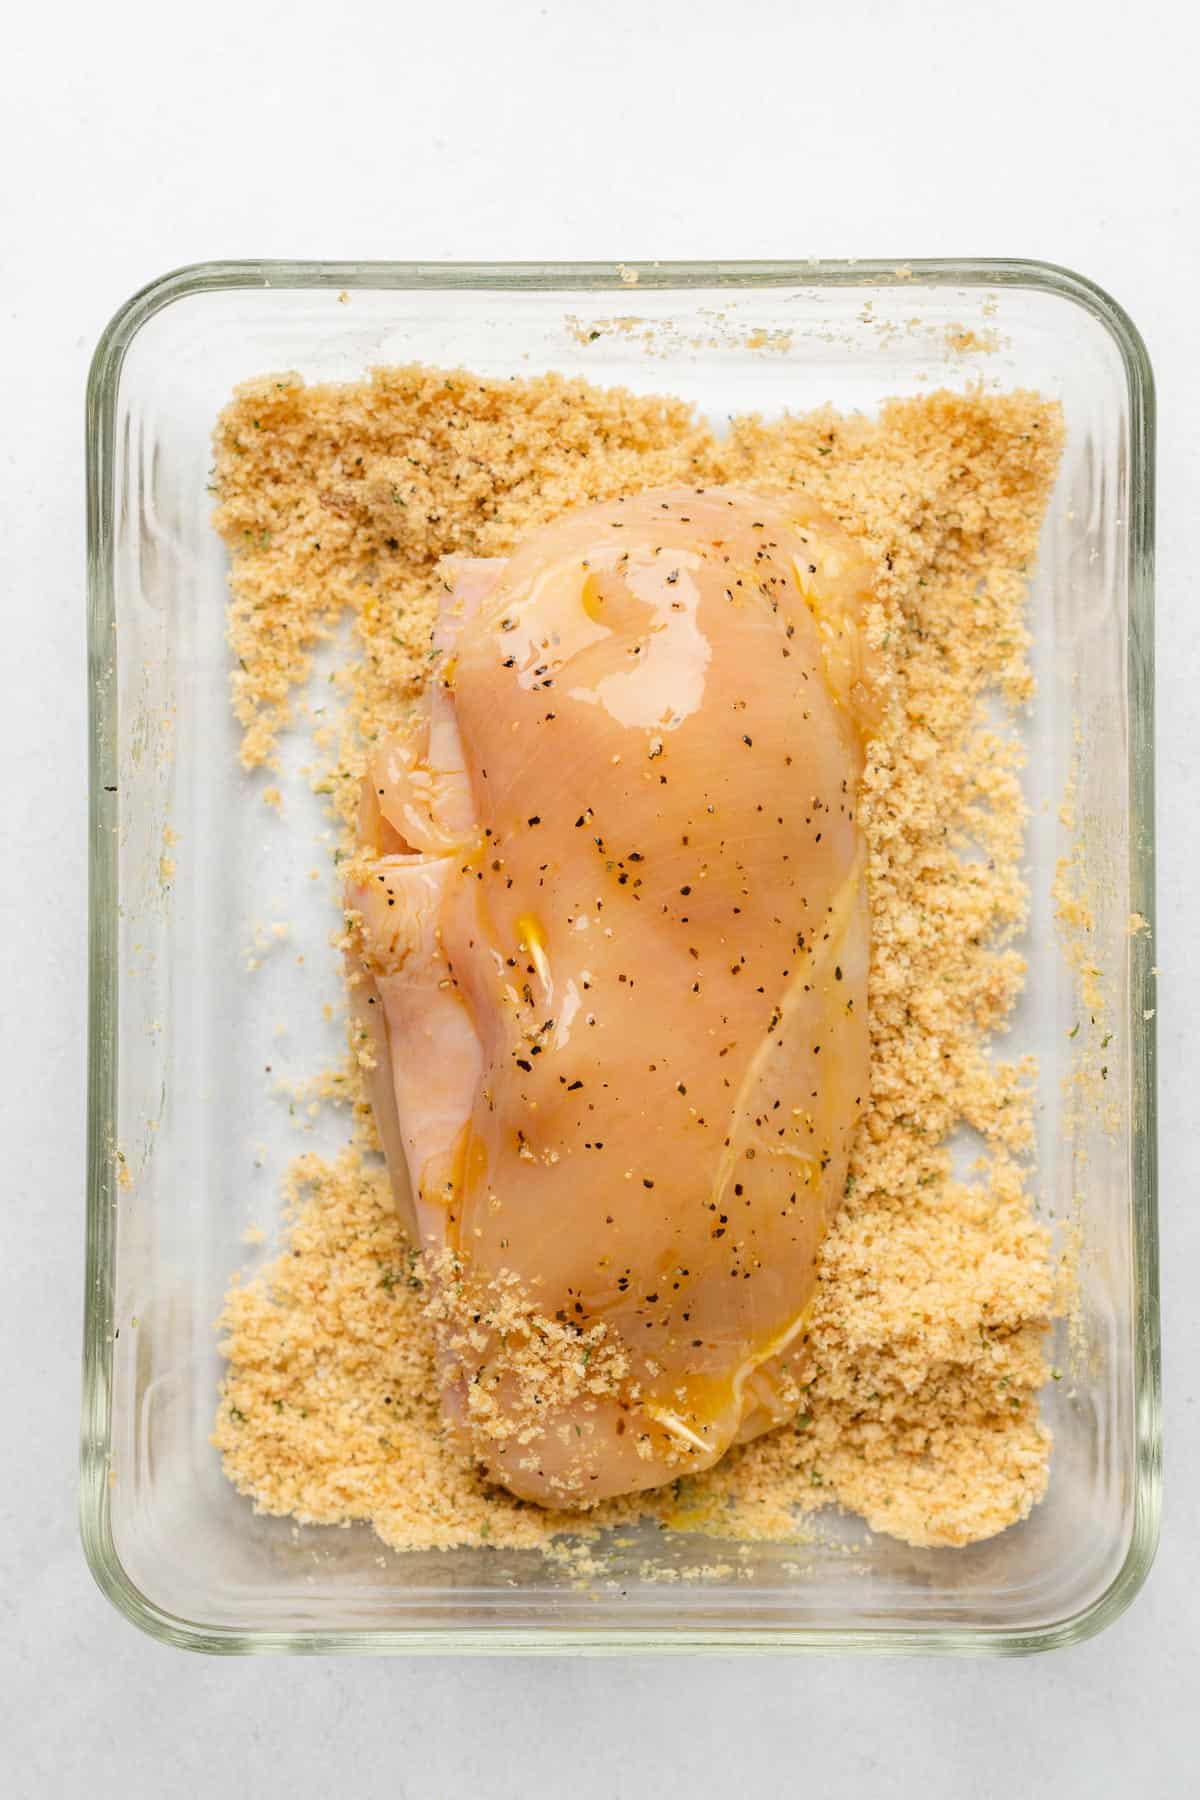 raw chicken breast in pork rind crumbs